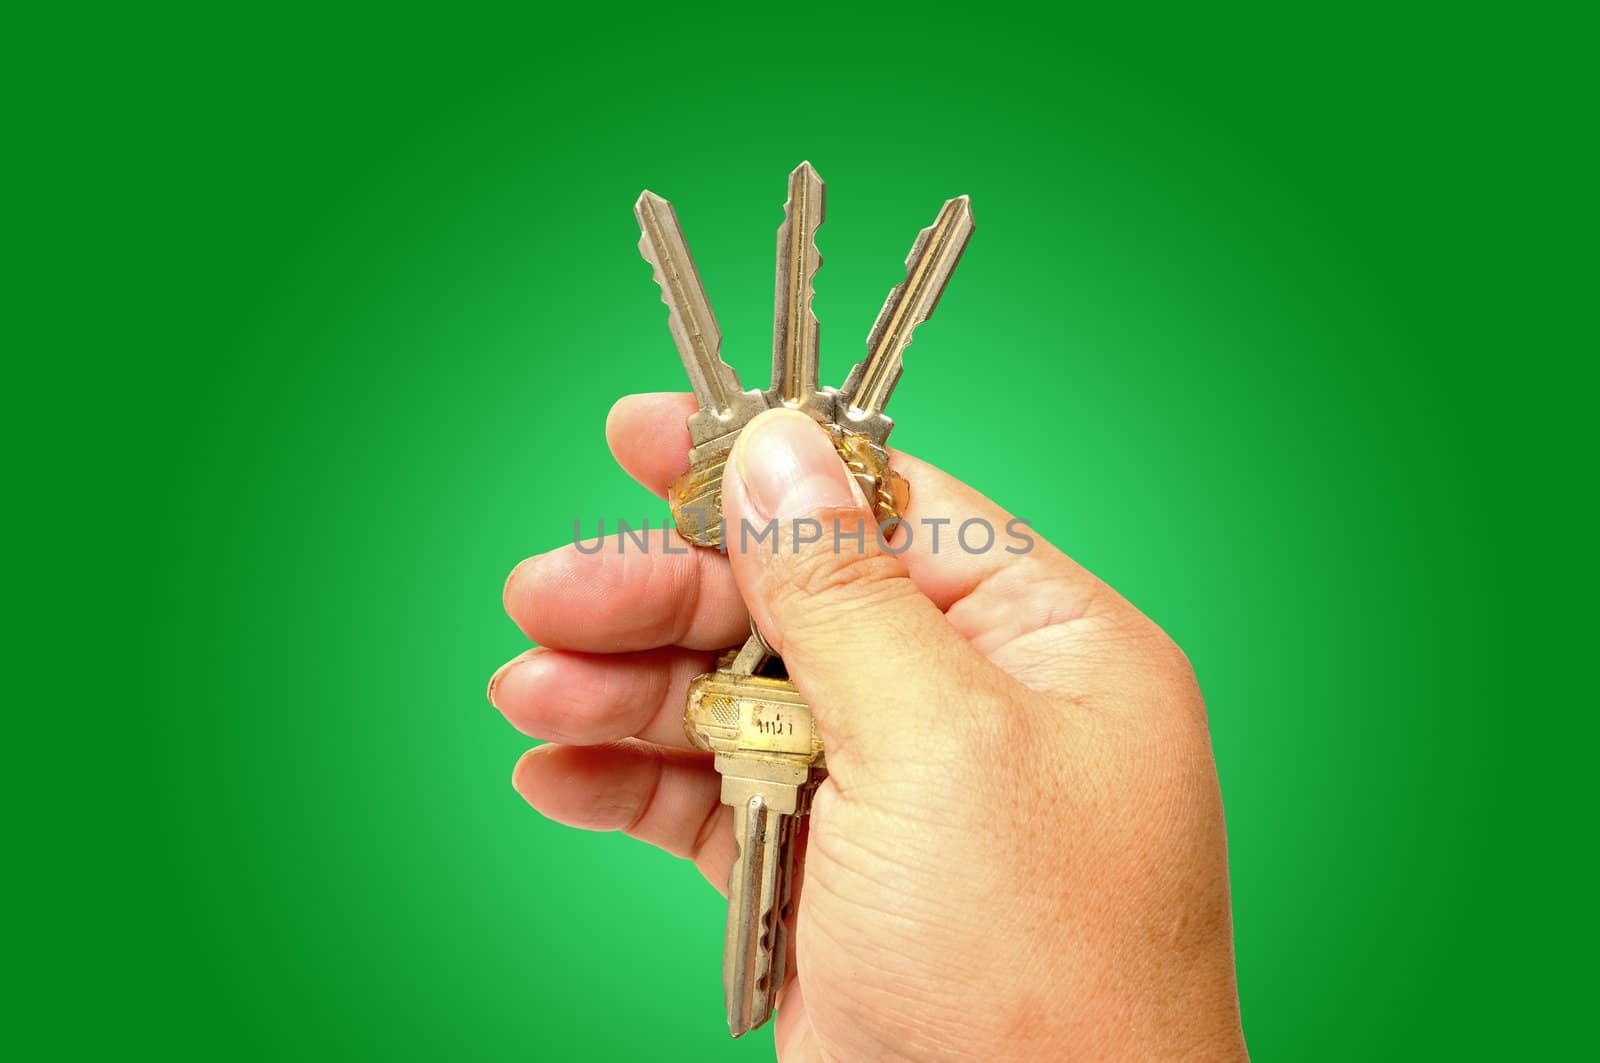 human hand with keys